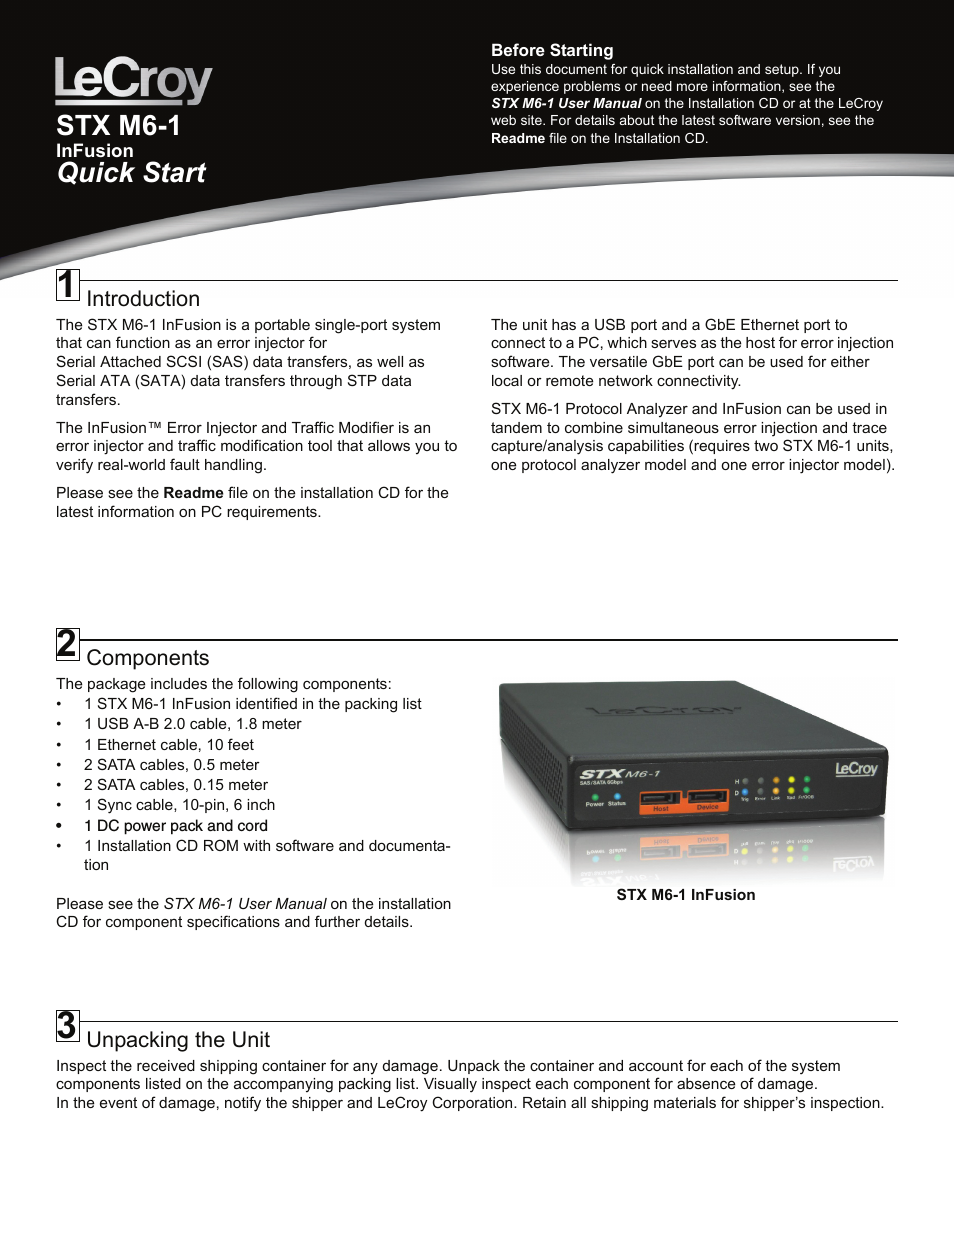 STX M6-1 InFusion Quick Start Manual